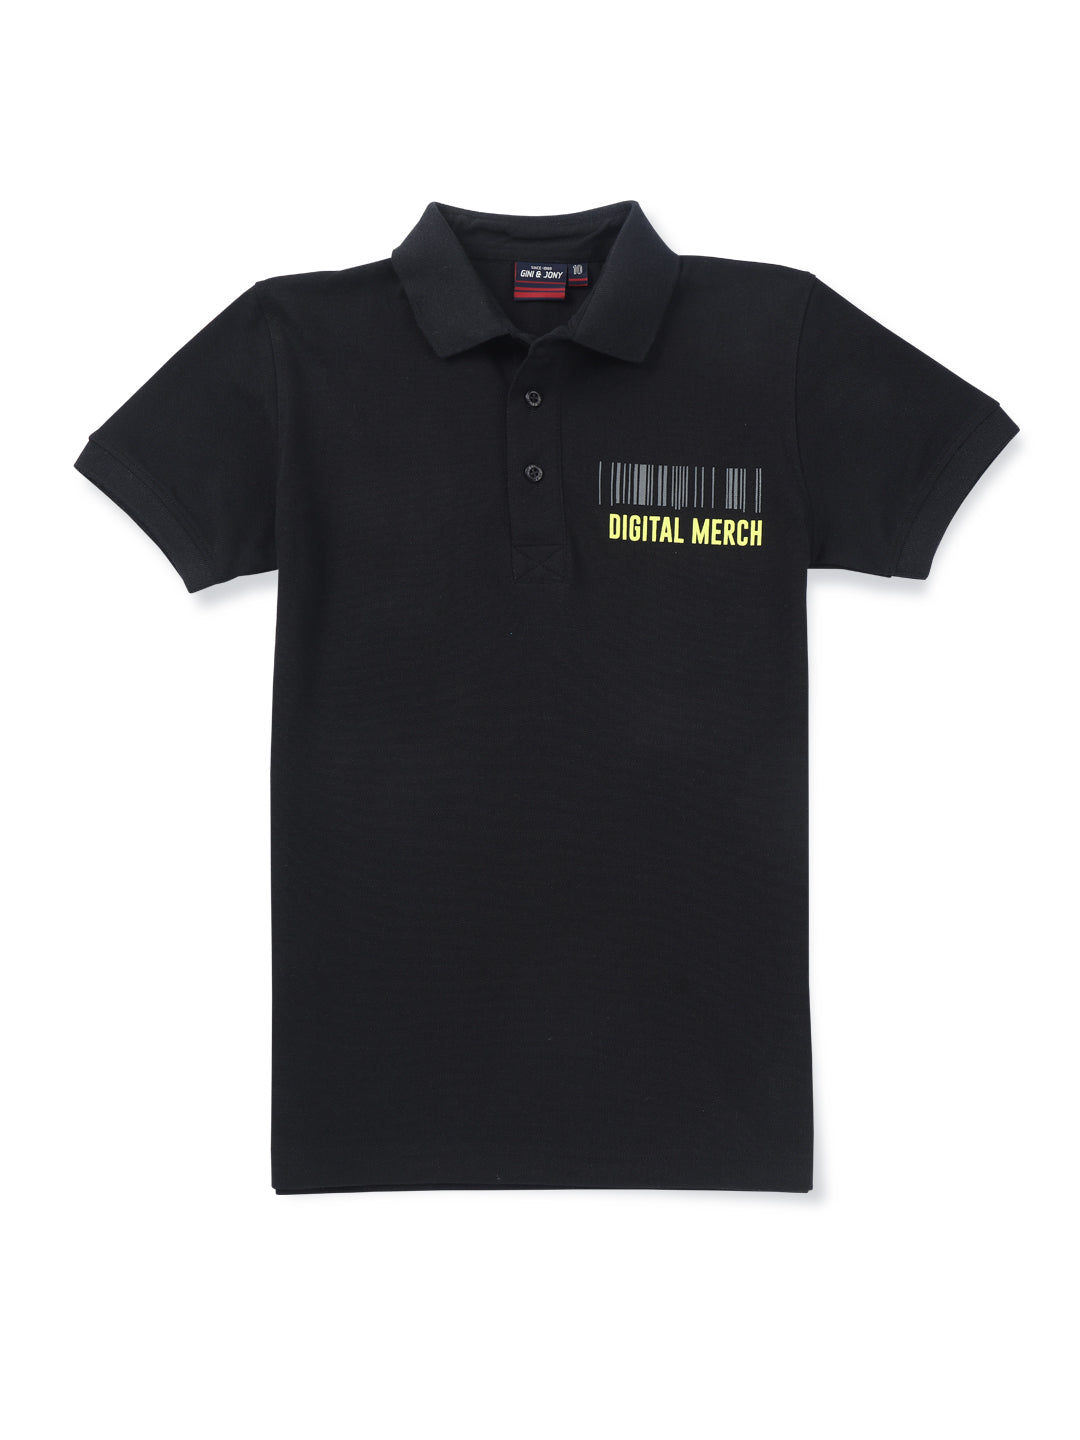 Boys Black Cotton Solid Polo T-Shirt